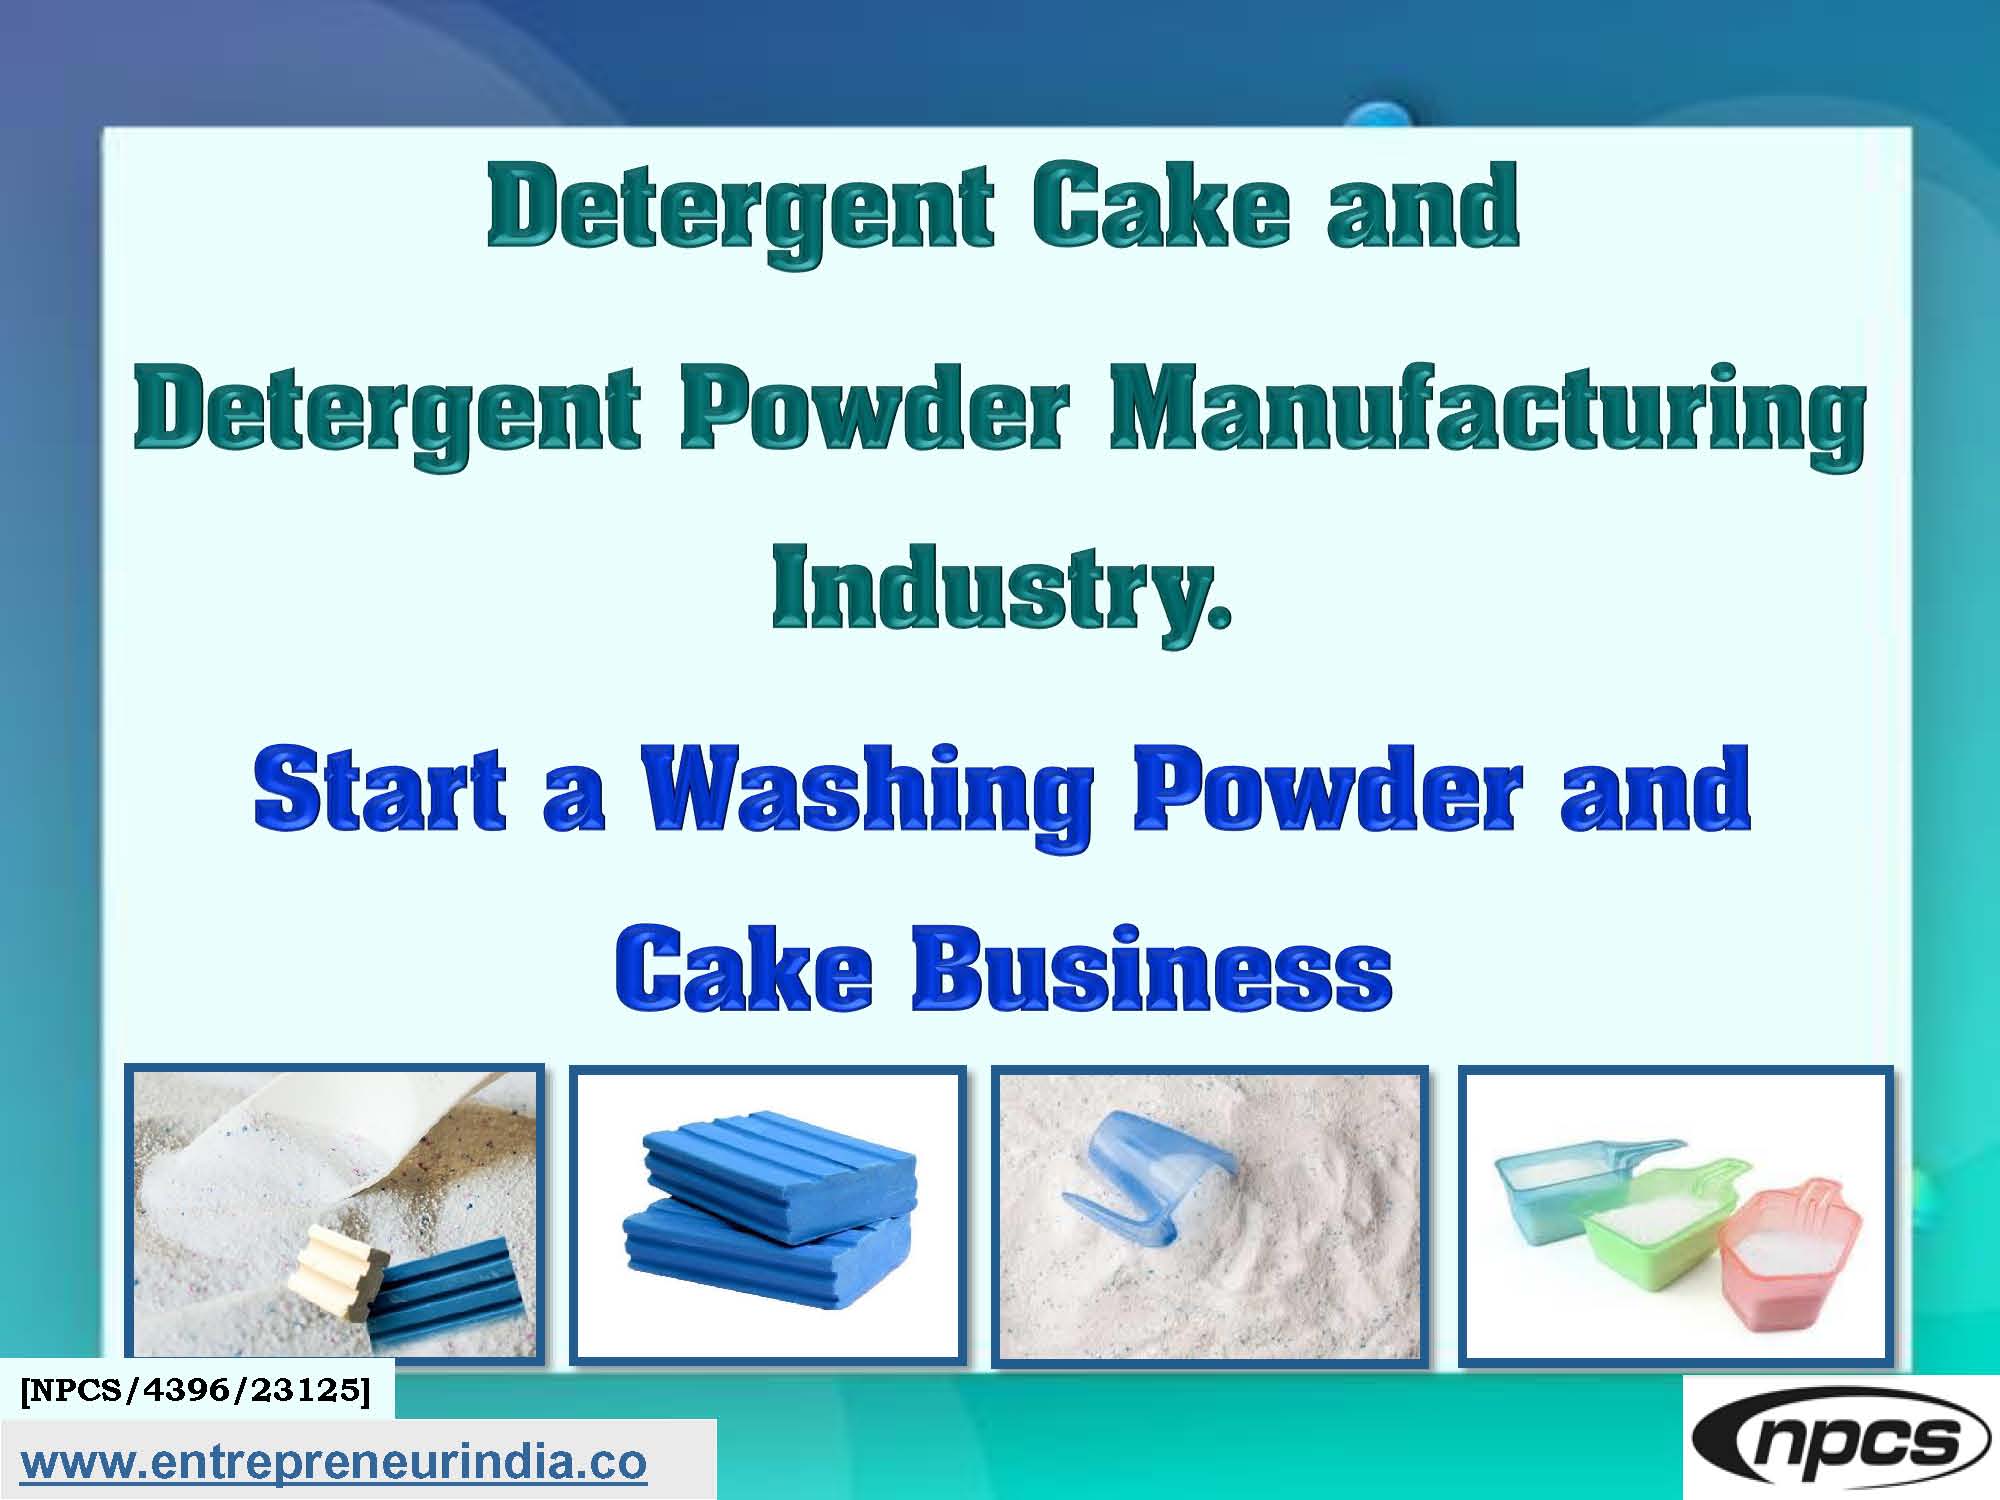 Detergent Cake and Detergent Powder Manufacturing Industry